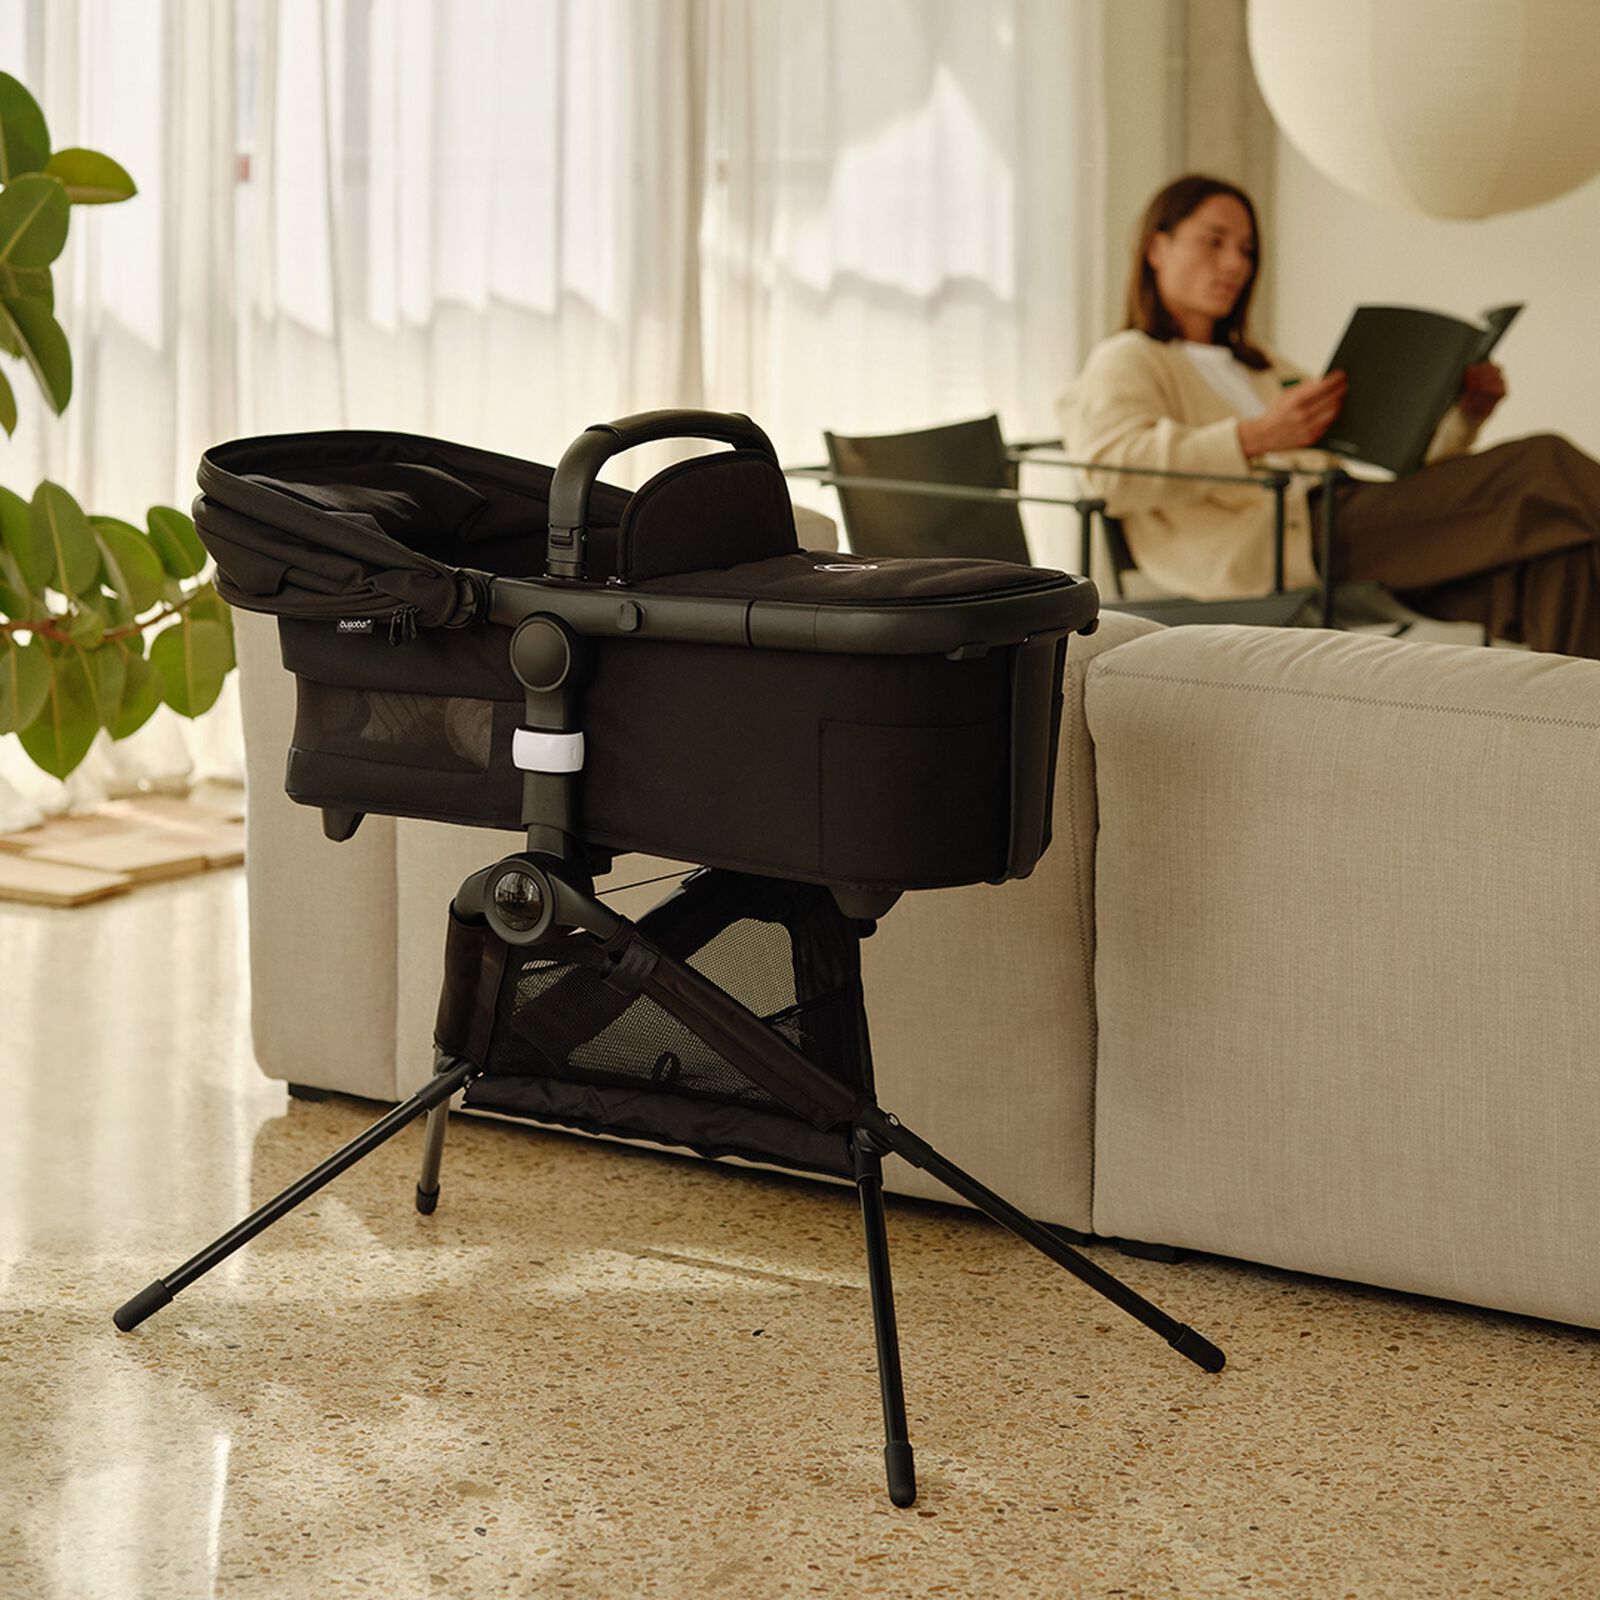 Bugaboo Fox 5 bassinet and seat stroller graphite base, midnight black fabrics, forest green sun canopy